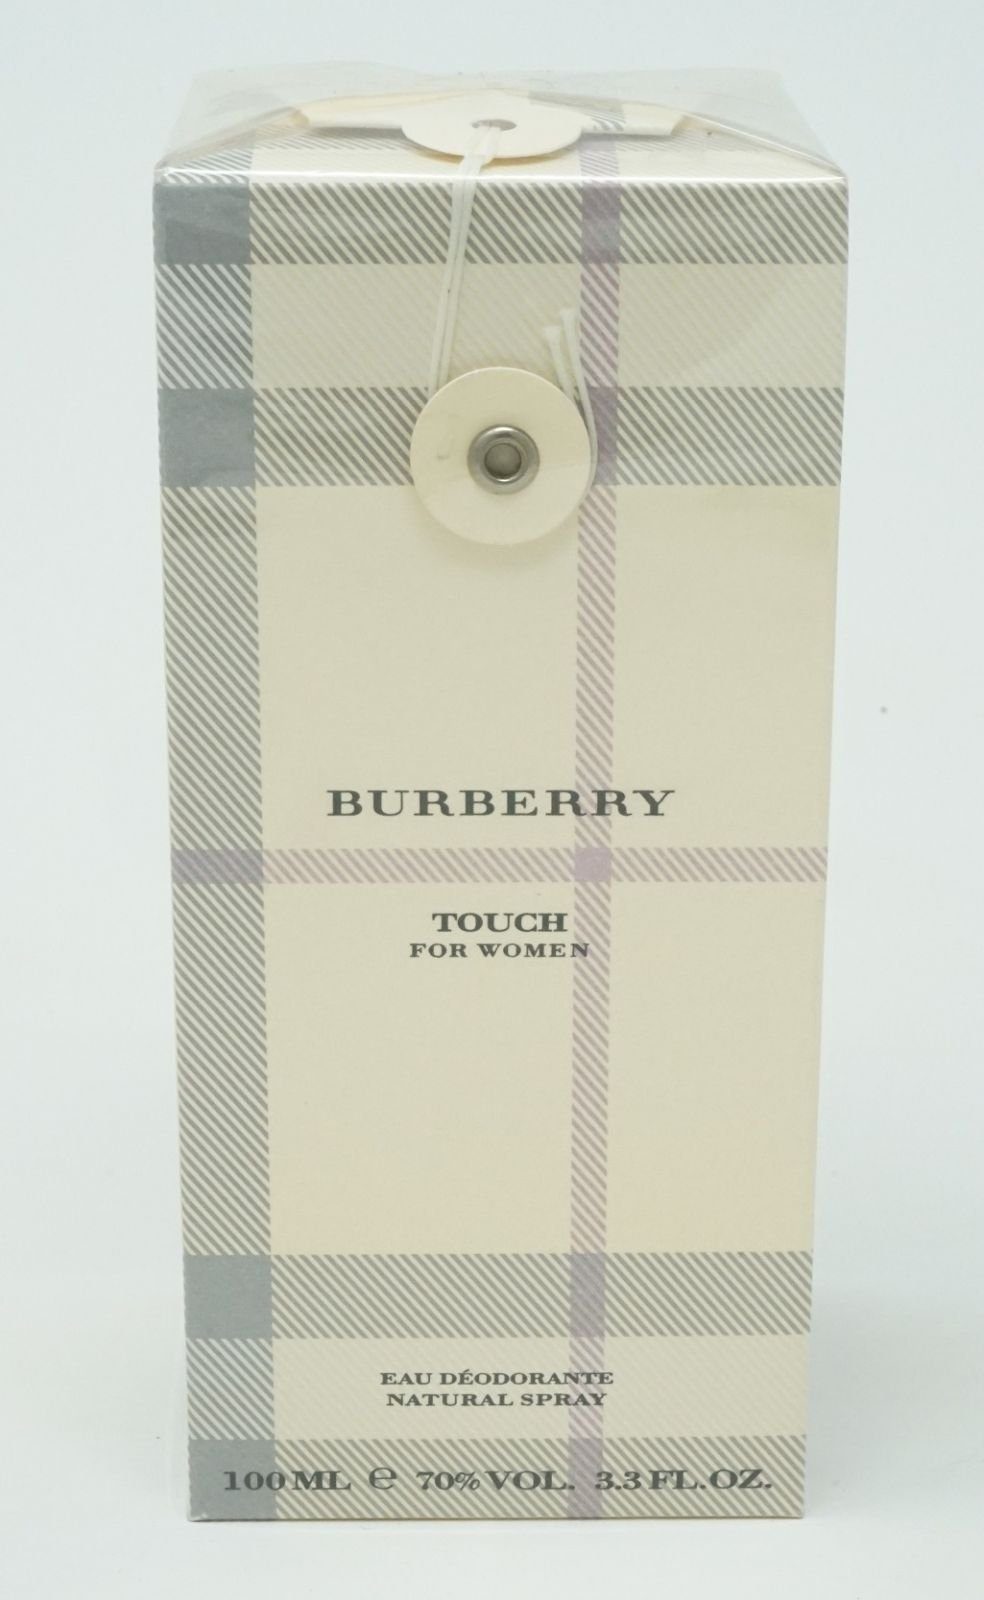 Burberry Spray 100ml Körperspray BURBERRY Women For Deodorant Touch